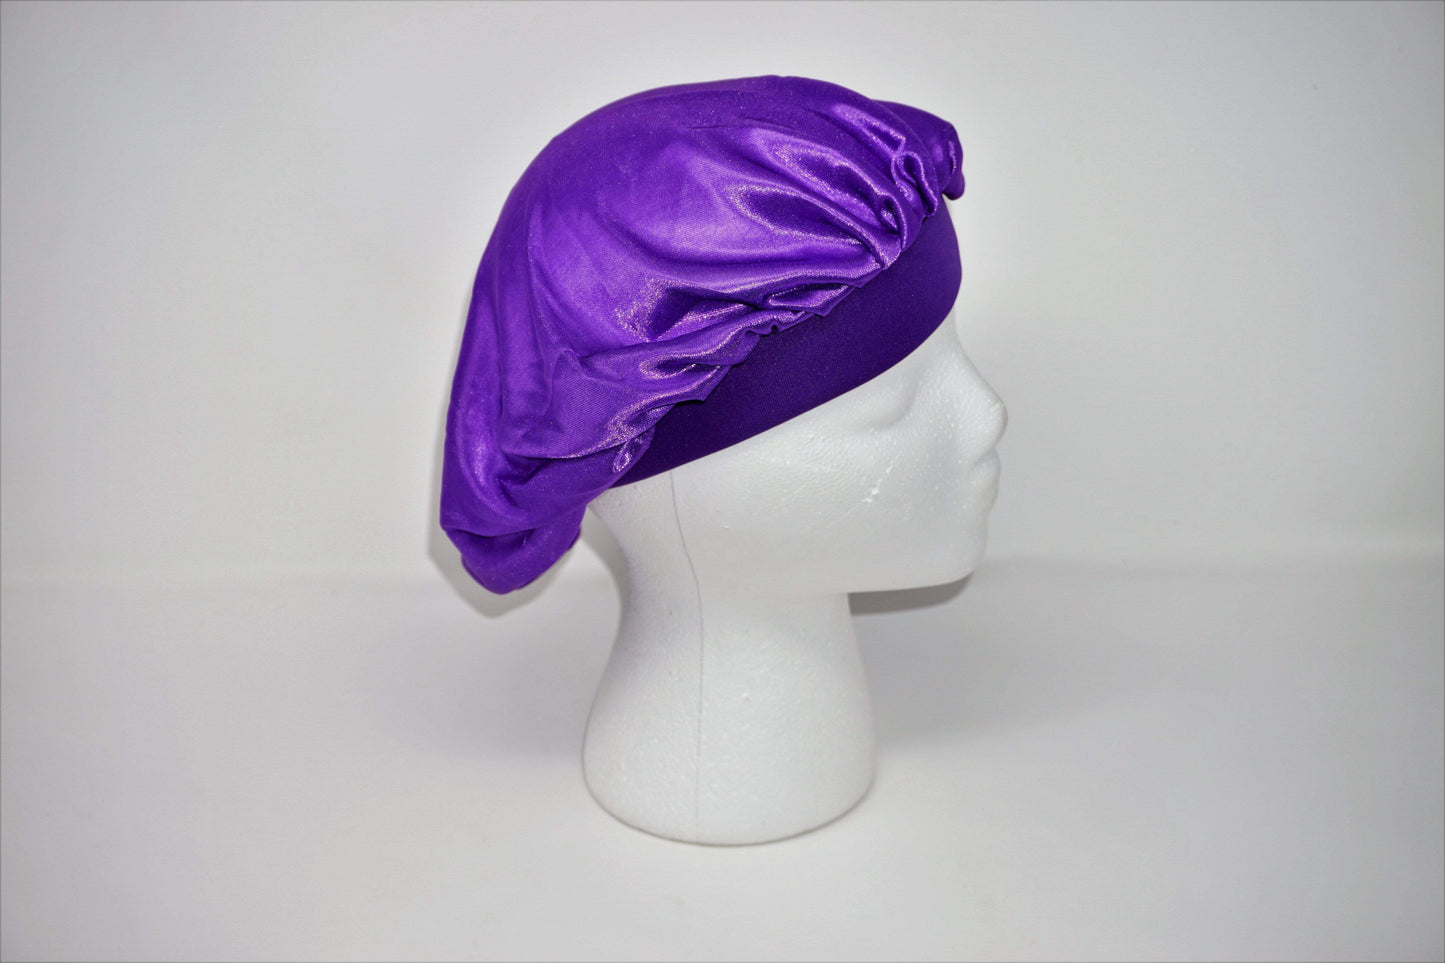 Drippy Rags Durags Bonnets Headbands Headwear More Regular Bonnets Purple Silky Satin Bonnet (2020 color updated)